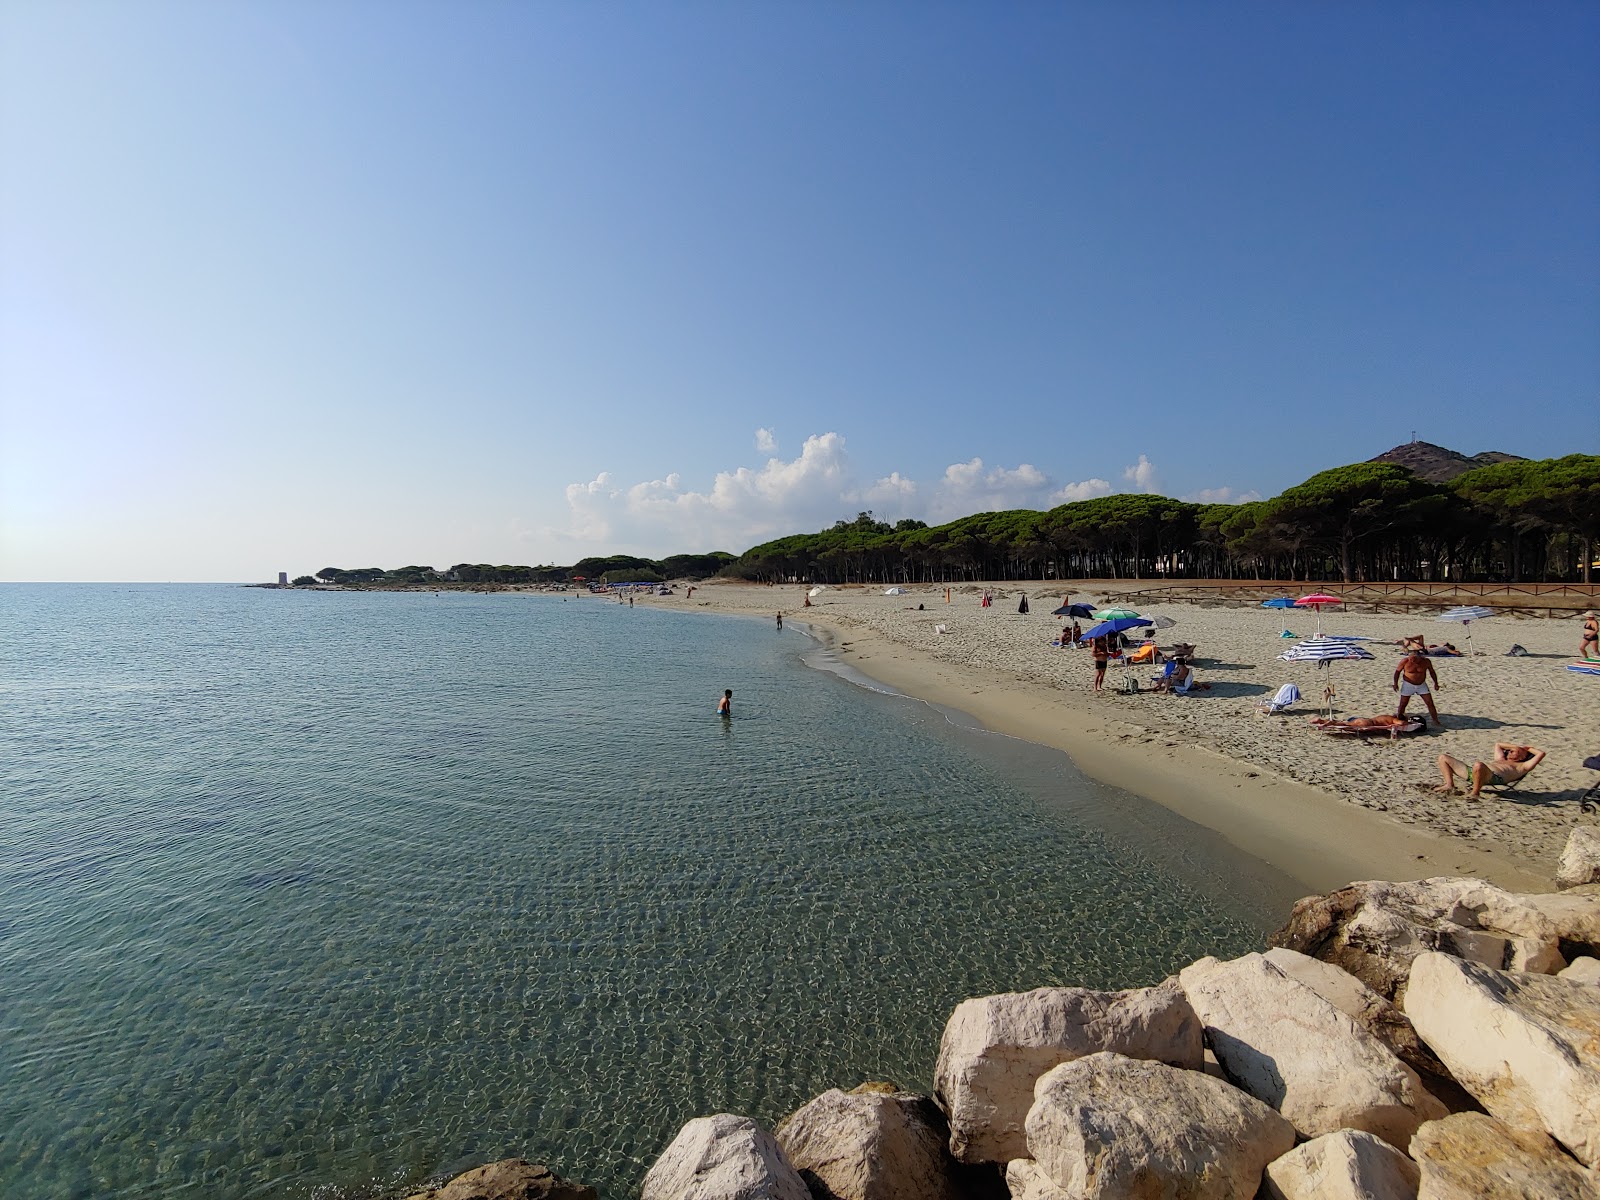 Foto de Spiaggia di San Giovanni - lugar popular entre los conocedores del relax